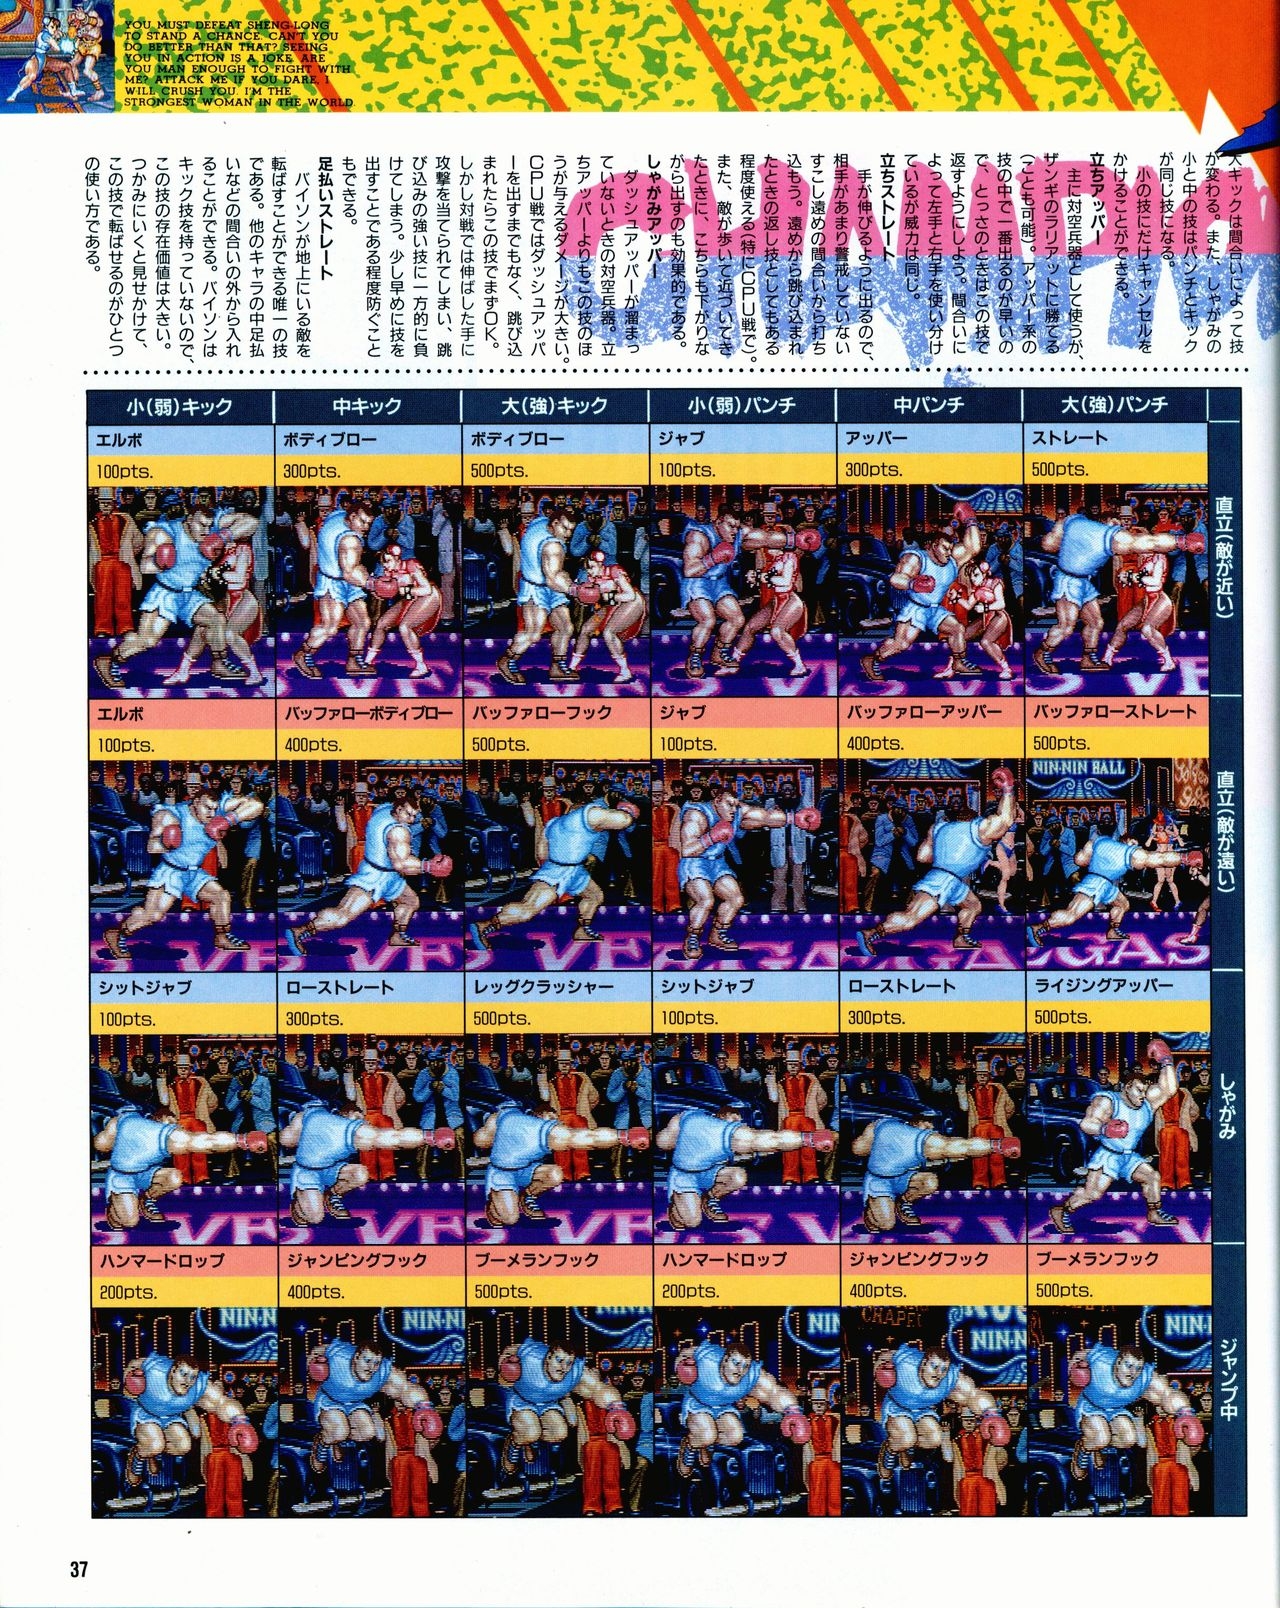 Street Fighter II Dash - Gamest special issue 77 38